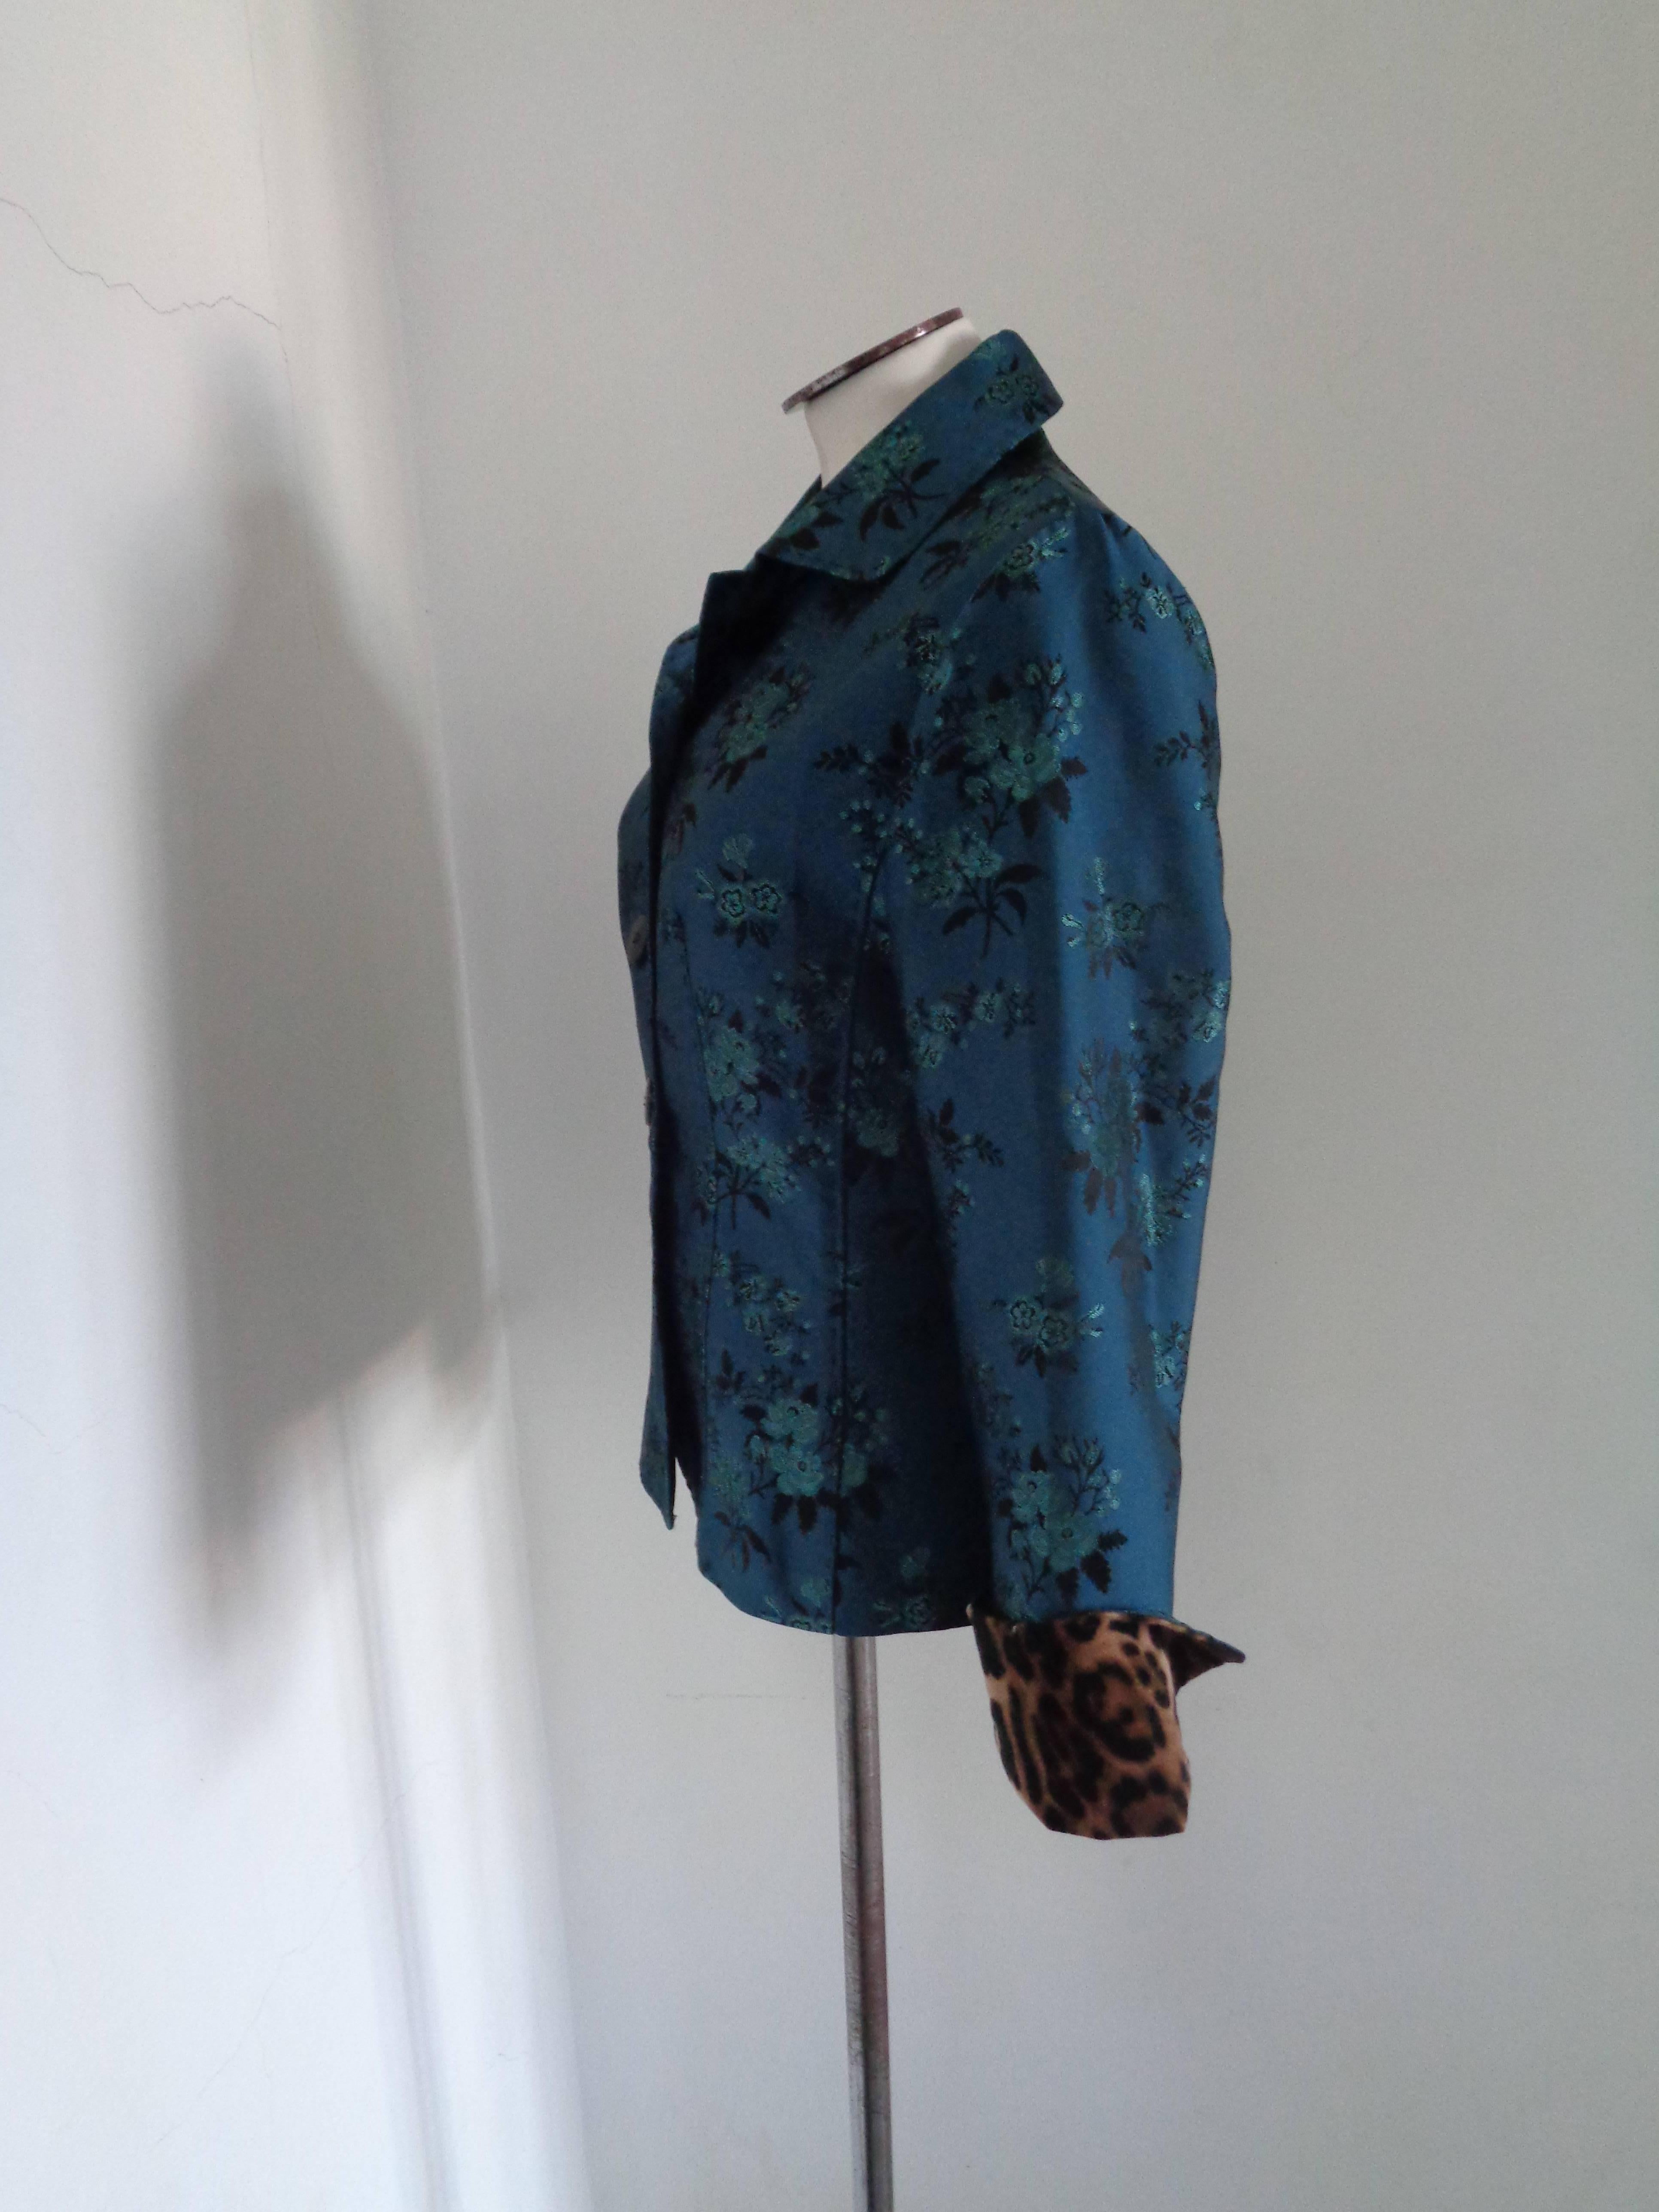 Pamela Flower embellished Blu jacket

Inside Leopard
Totally made in italy in size M 